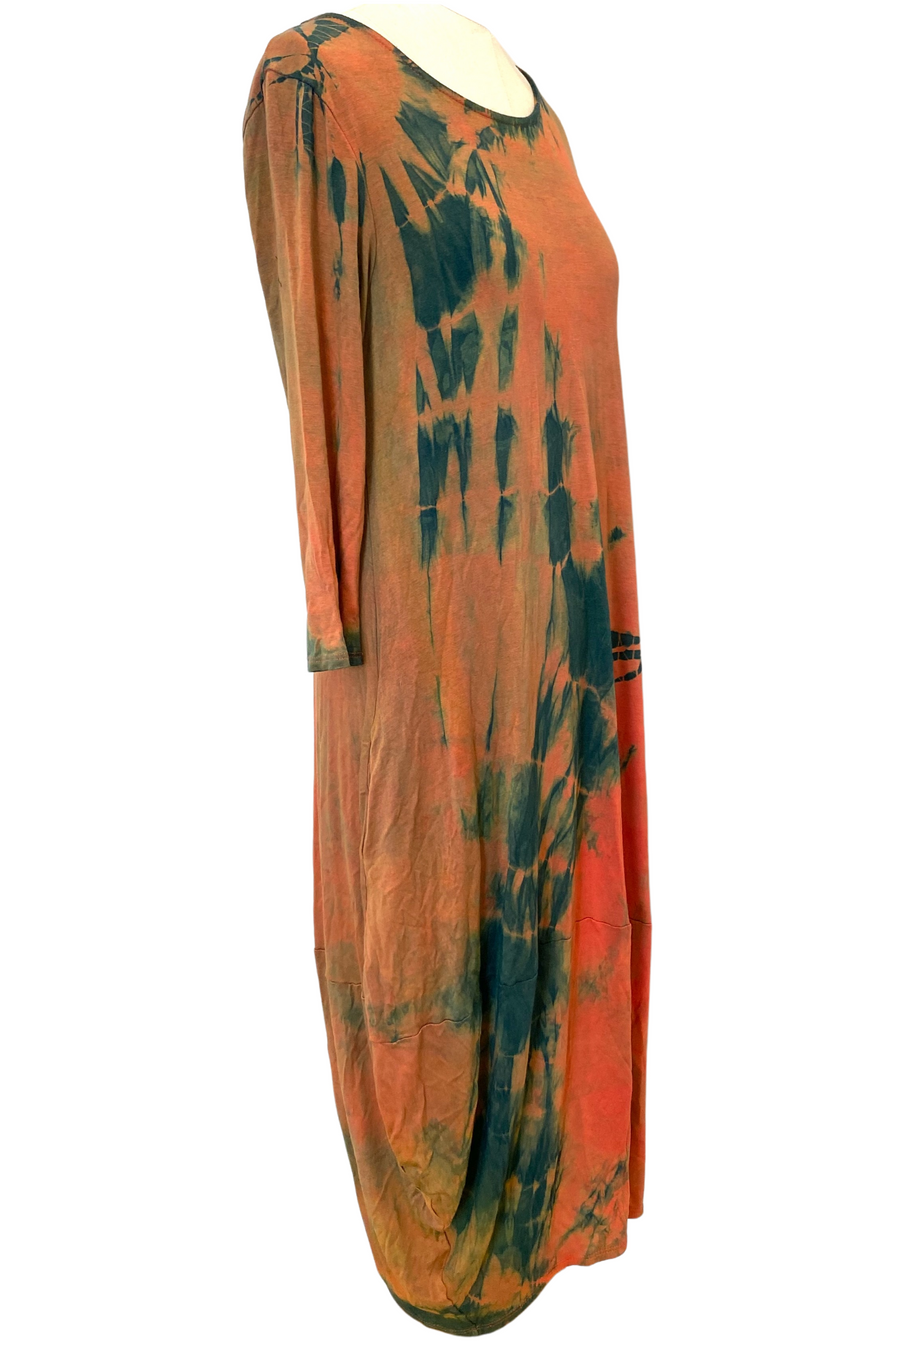 Botanically Dyed Bamboo Knit Dress in Orange Willow